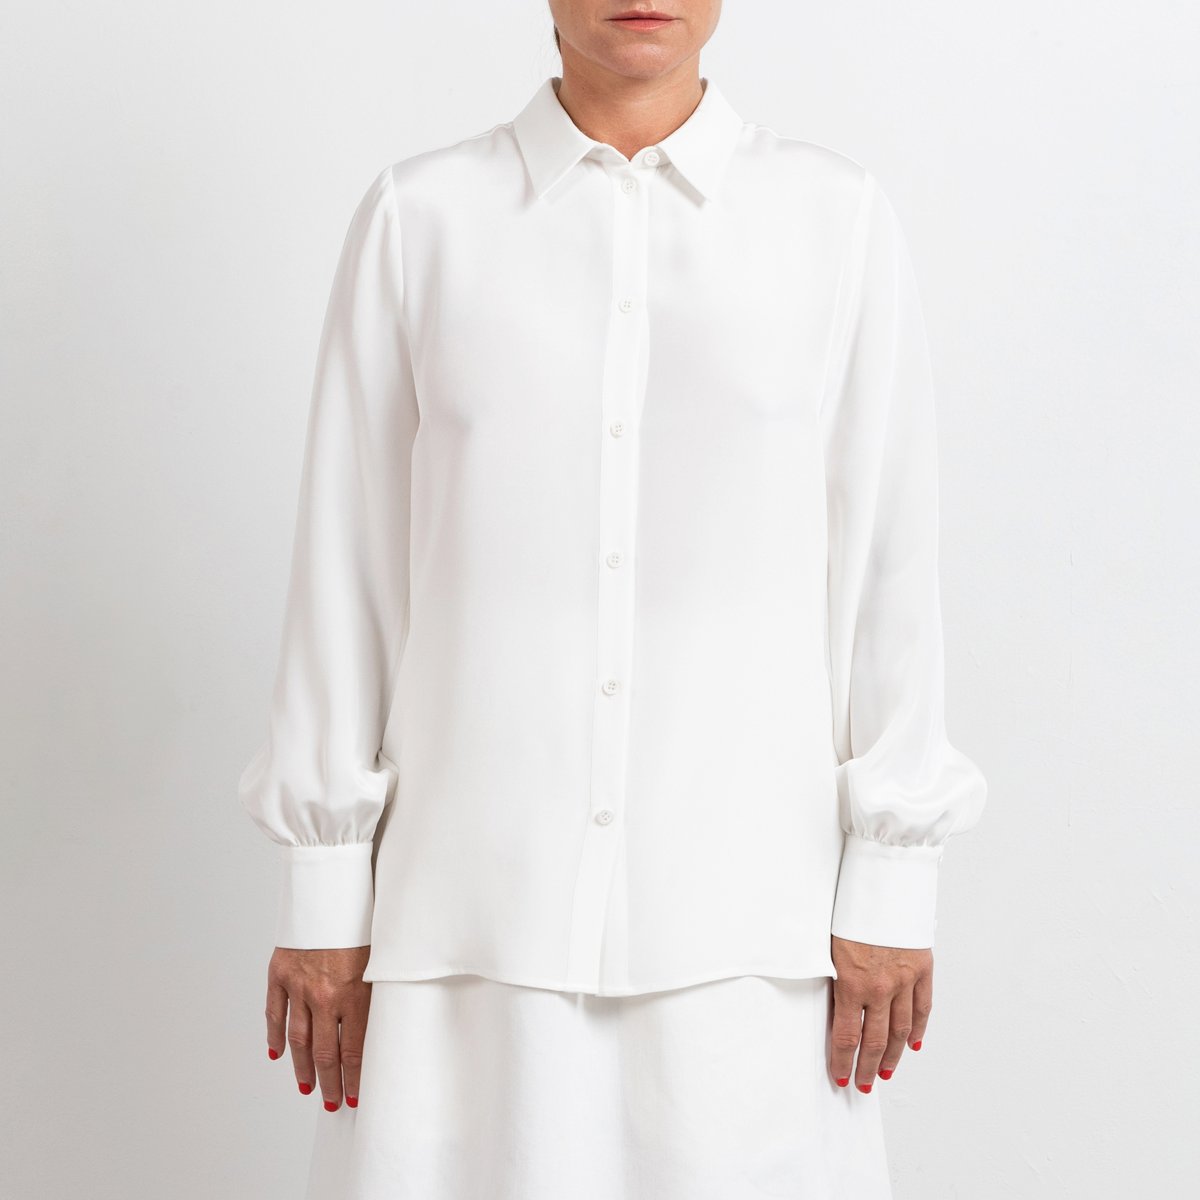 White shirt silk crepe